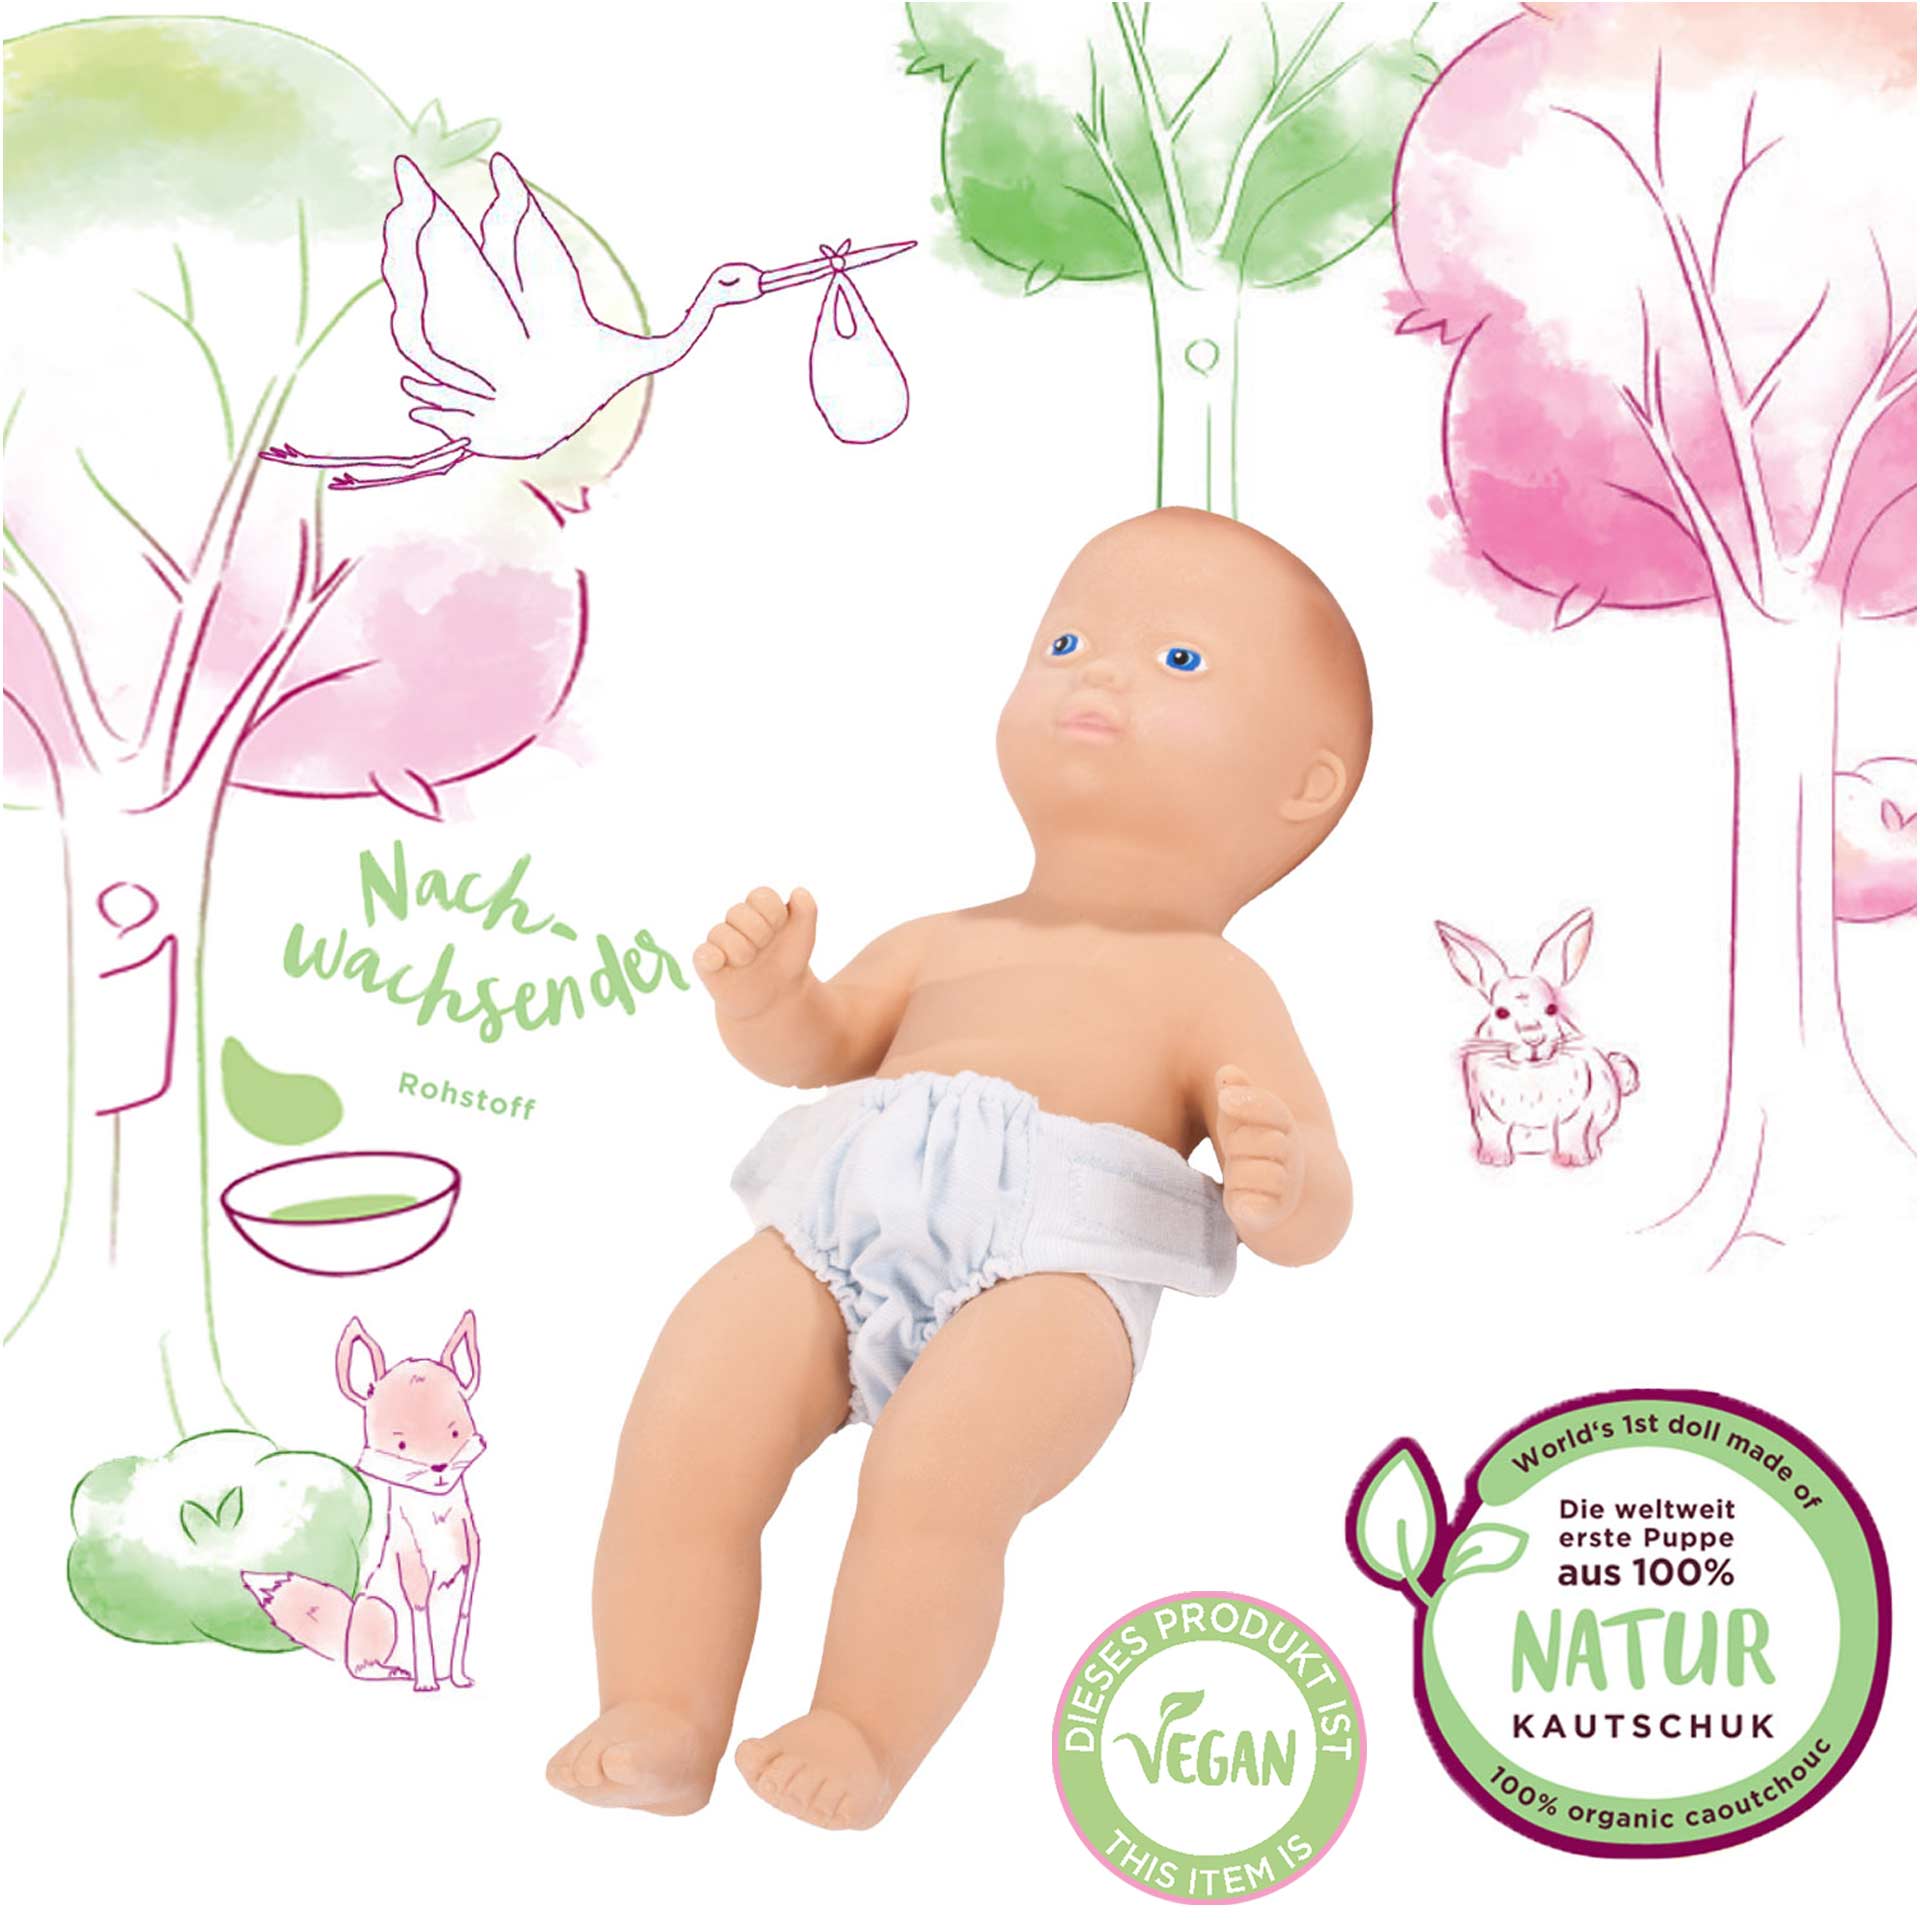 baby-pure-linus-babypuppe-badepuppe-goetz-badebaby-kautschukpuppe-naturkautschuk-oekologisch-nachhaltig-vegan